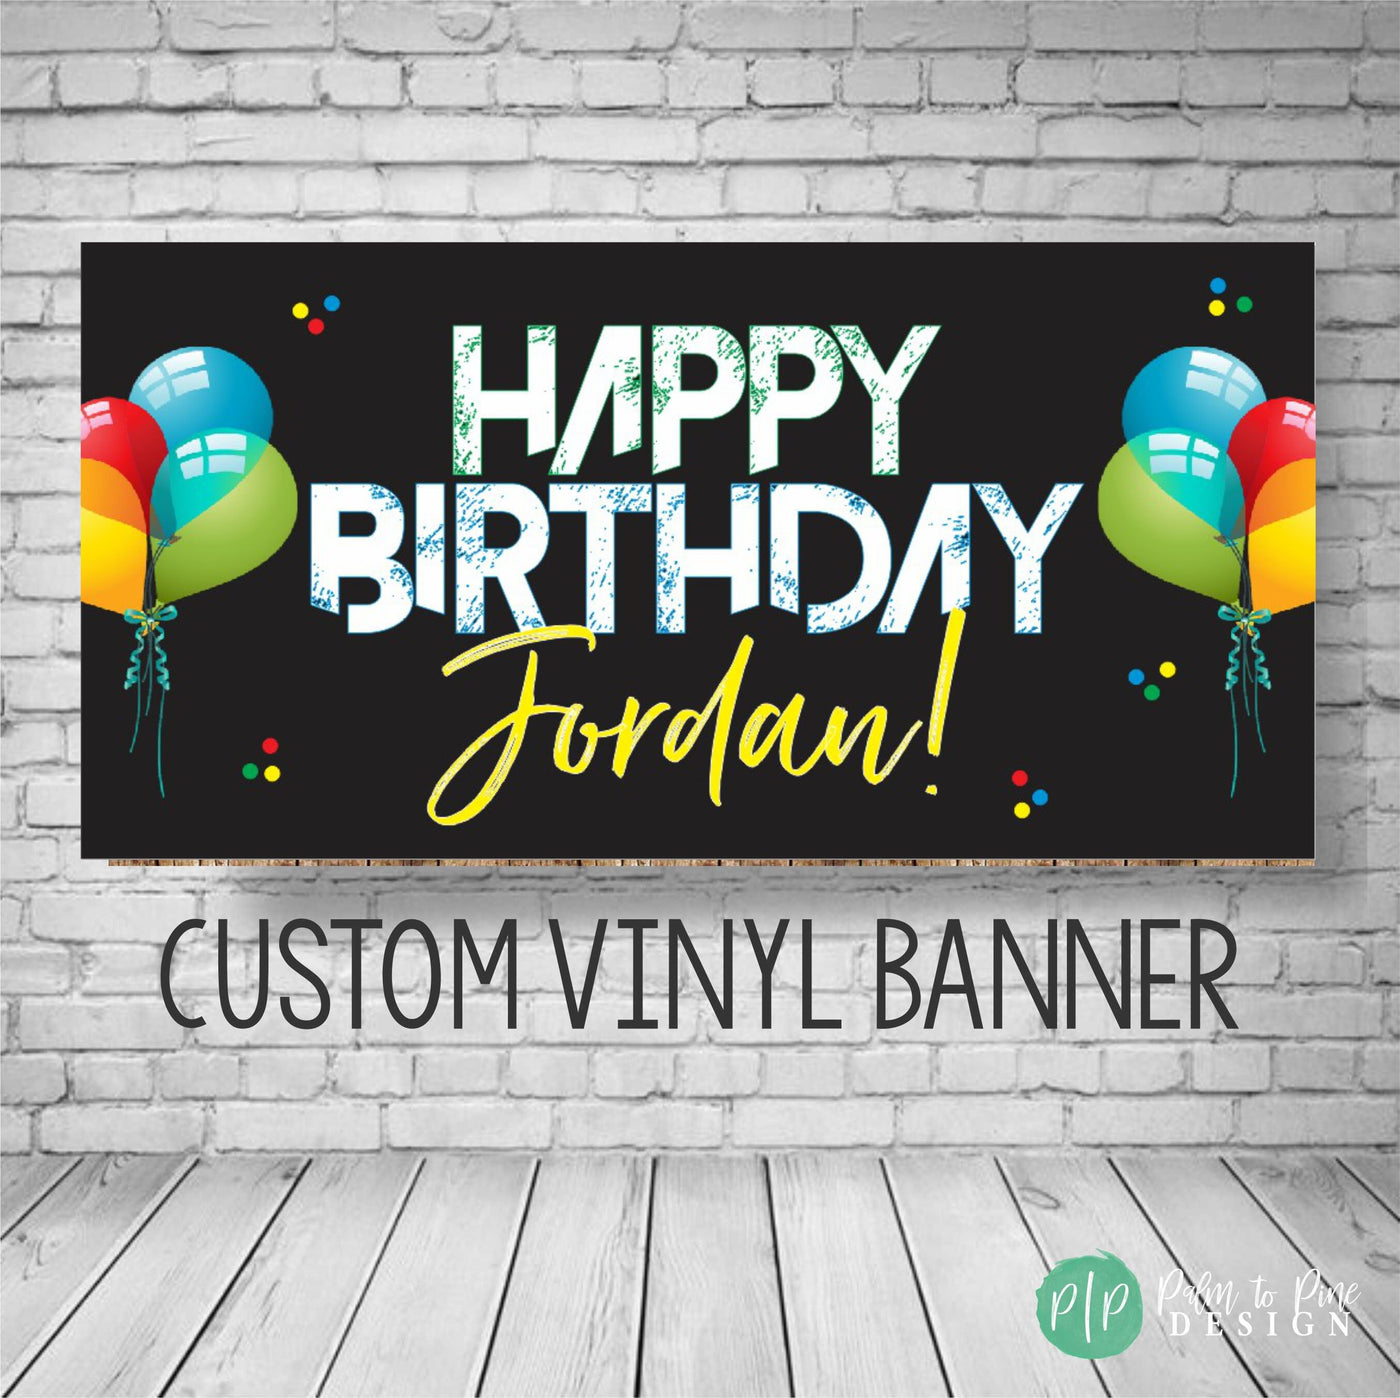 Happy birthday banner personalized, Birthday Banner for yard, Custom birthday banner, yard banner, birthday yard decorations, banner men